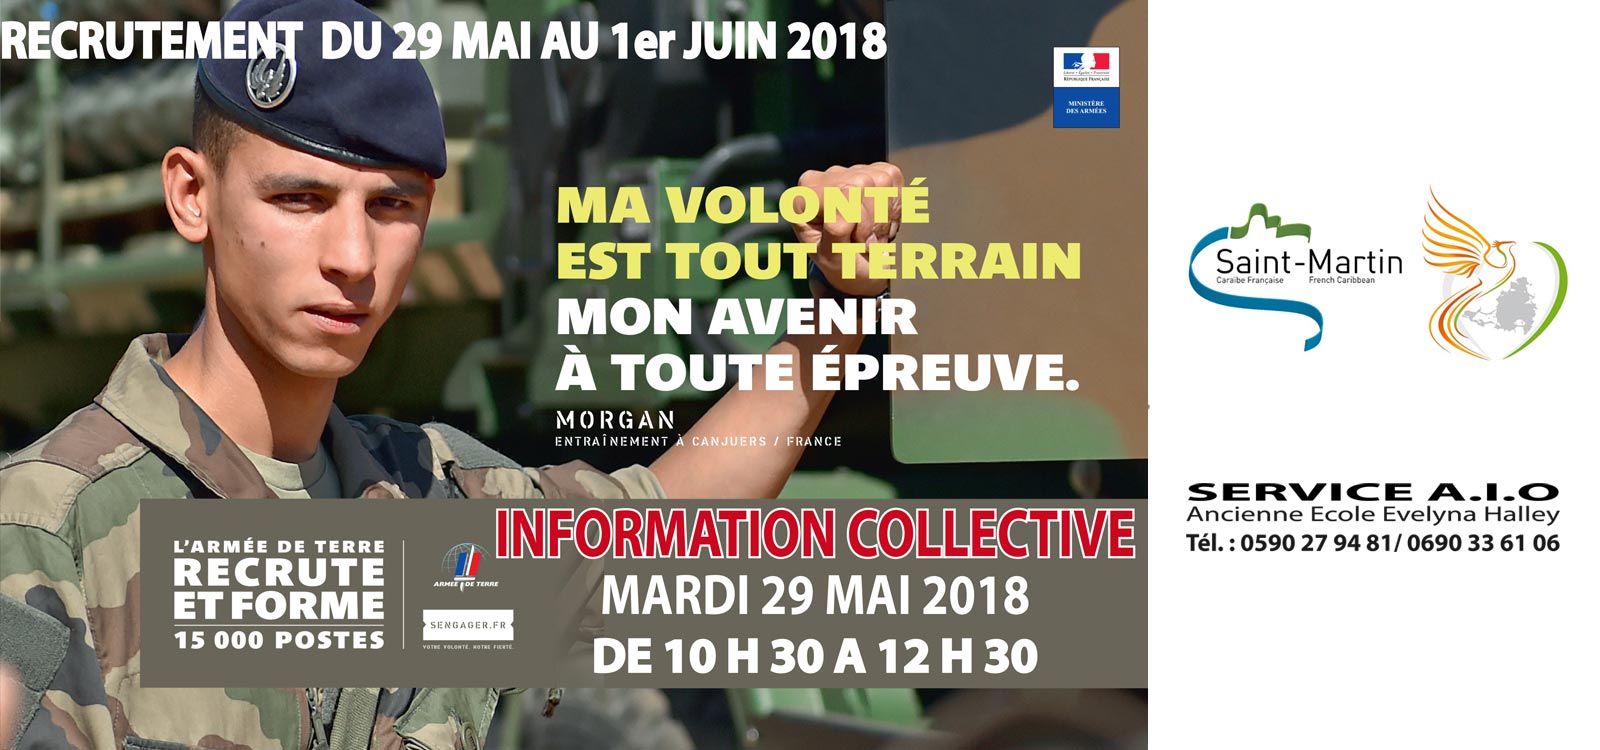 L'Armée de Terre recrute à  Saint-Martin du 29 mai au 1er juin 2018